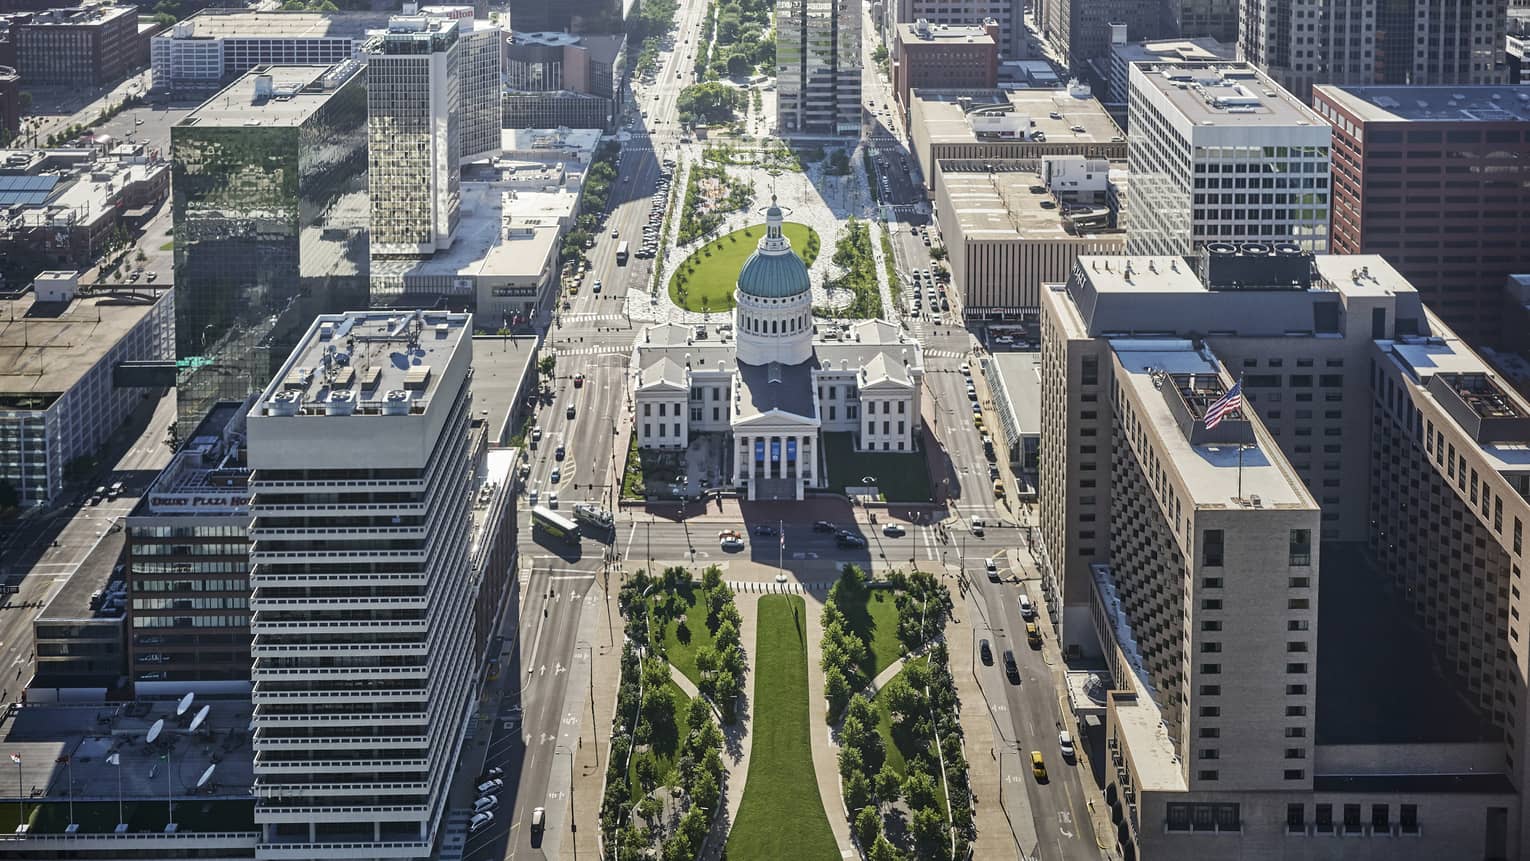 Aerial view of St. Louis city buildings, Kiener Plaza 